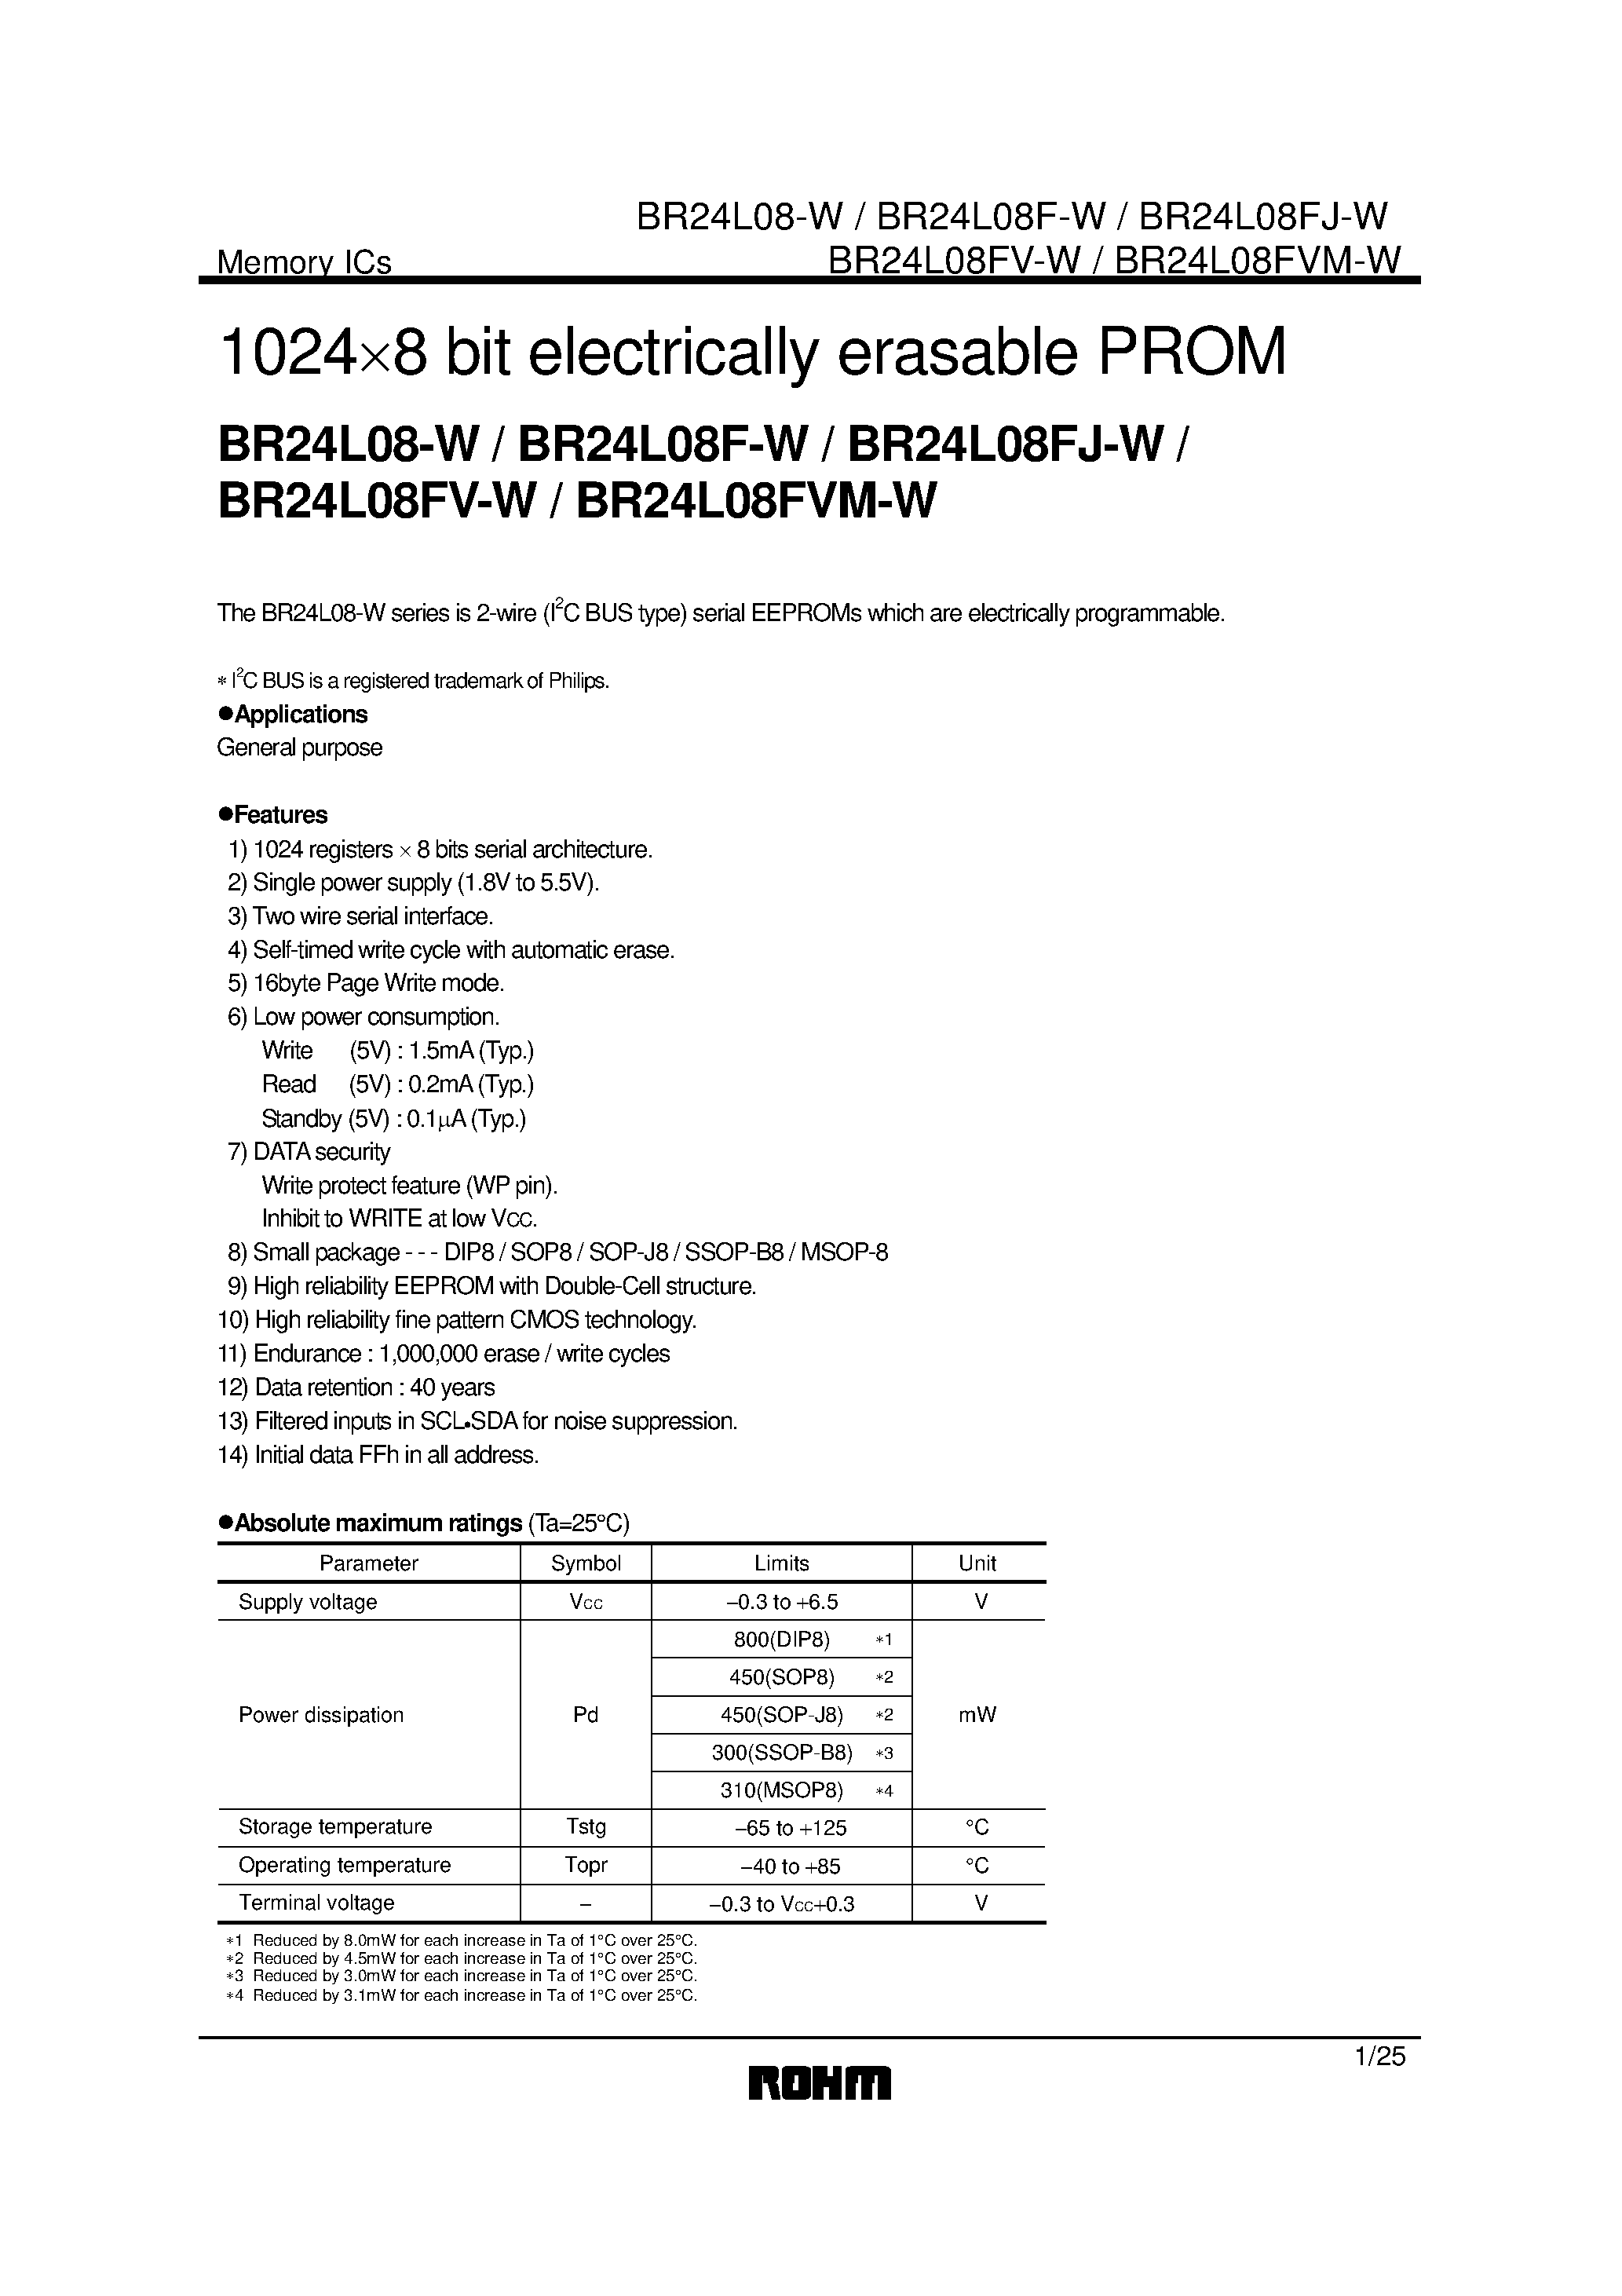 Datasheet BR24L08FJ-W - 10248 bit electrically erasable PROM page 1